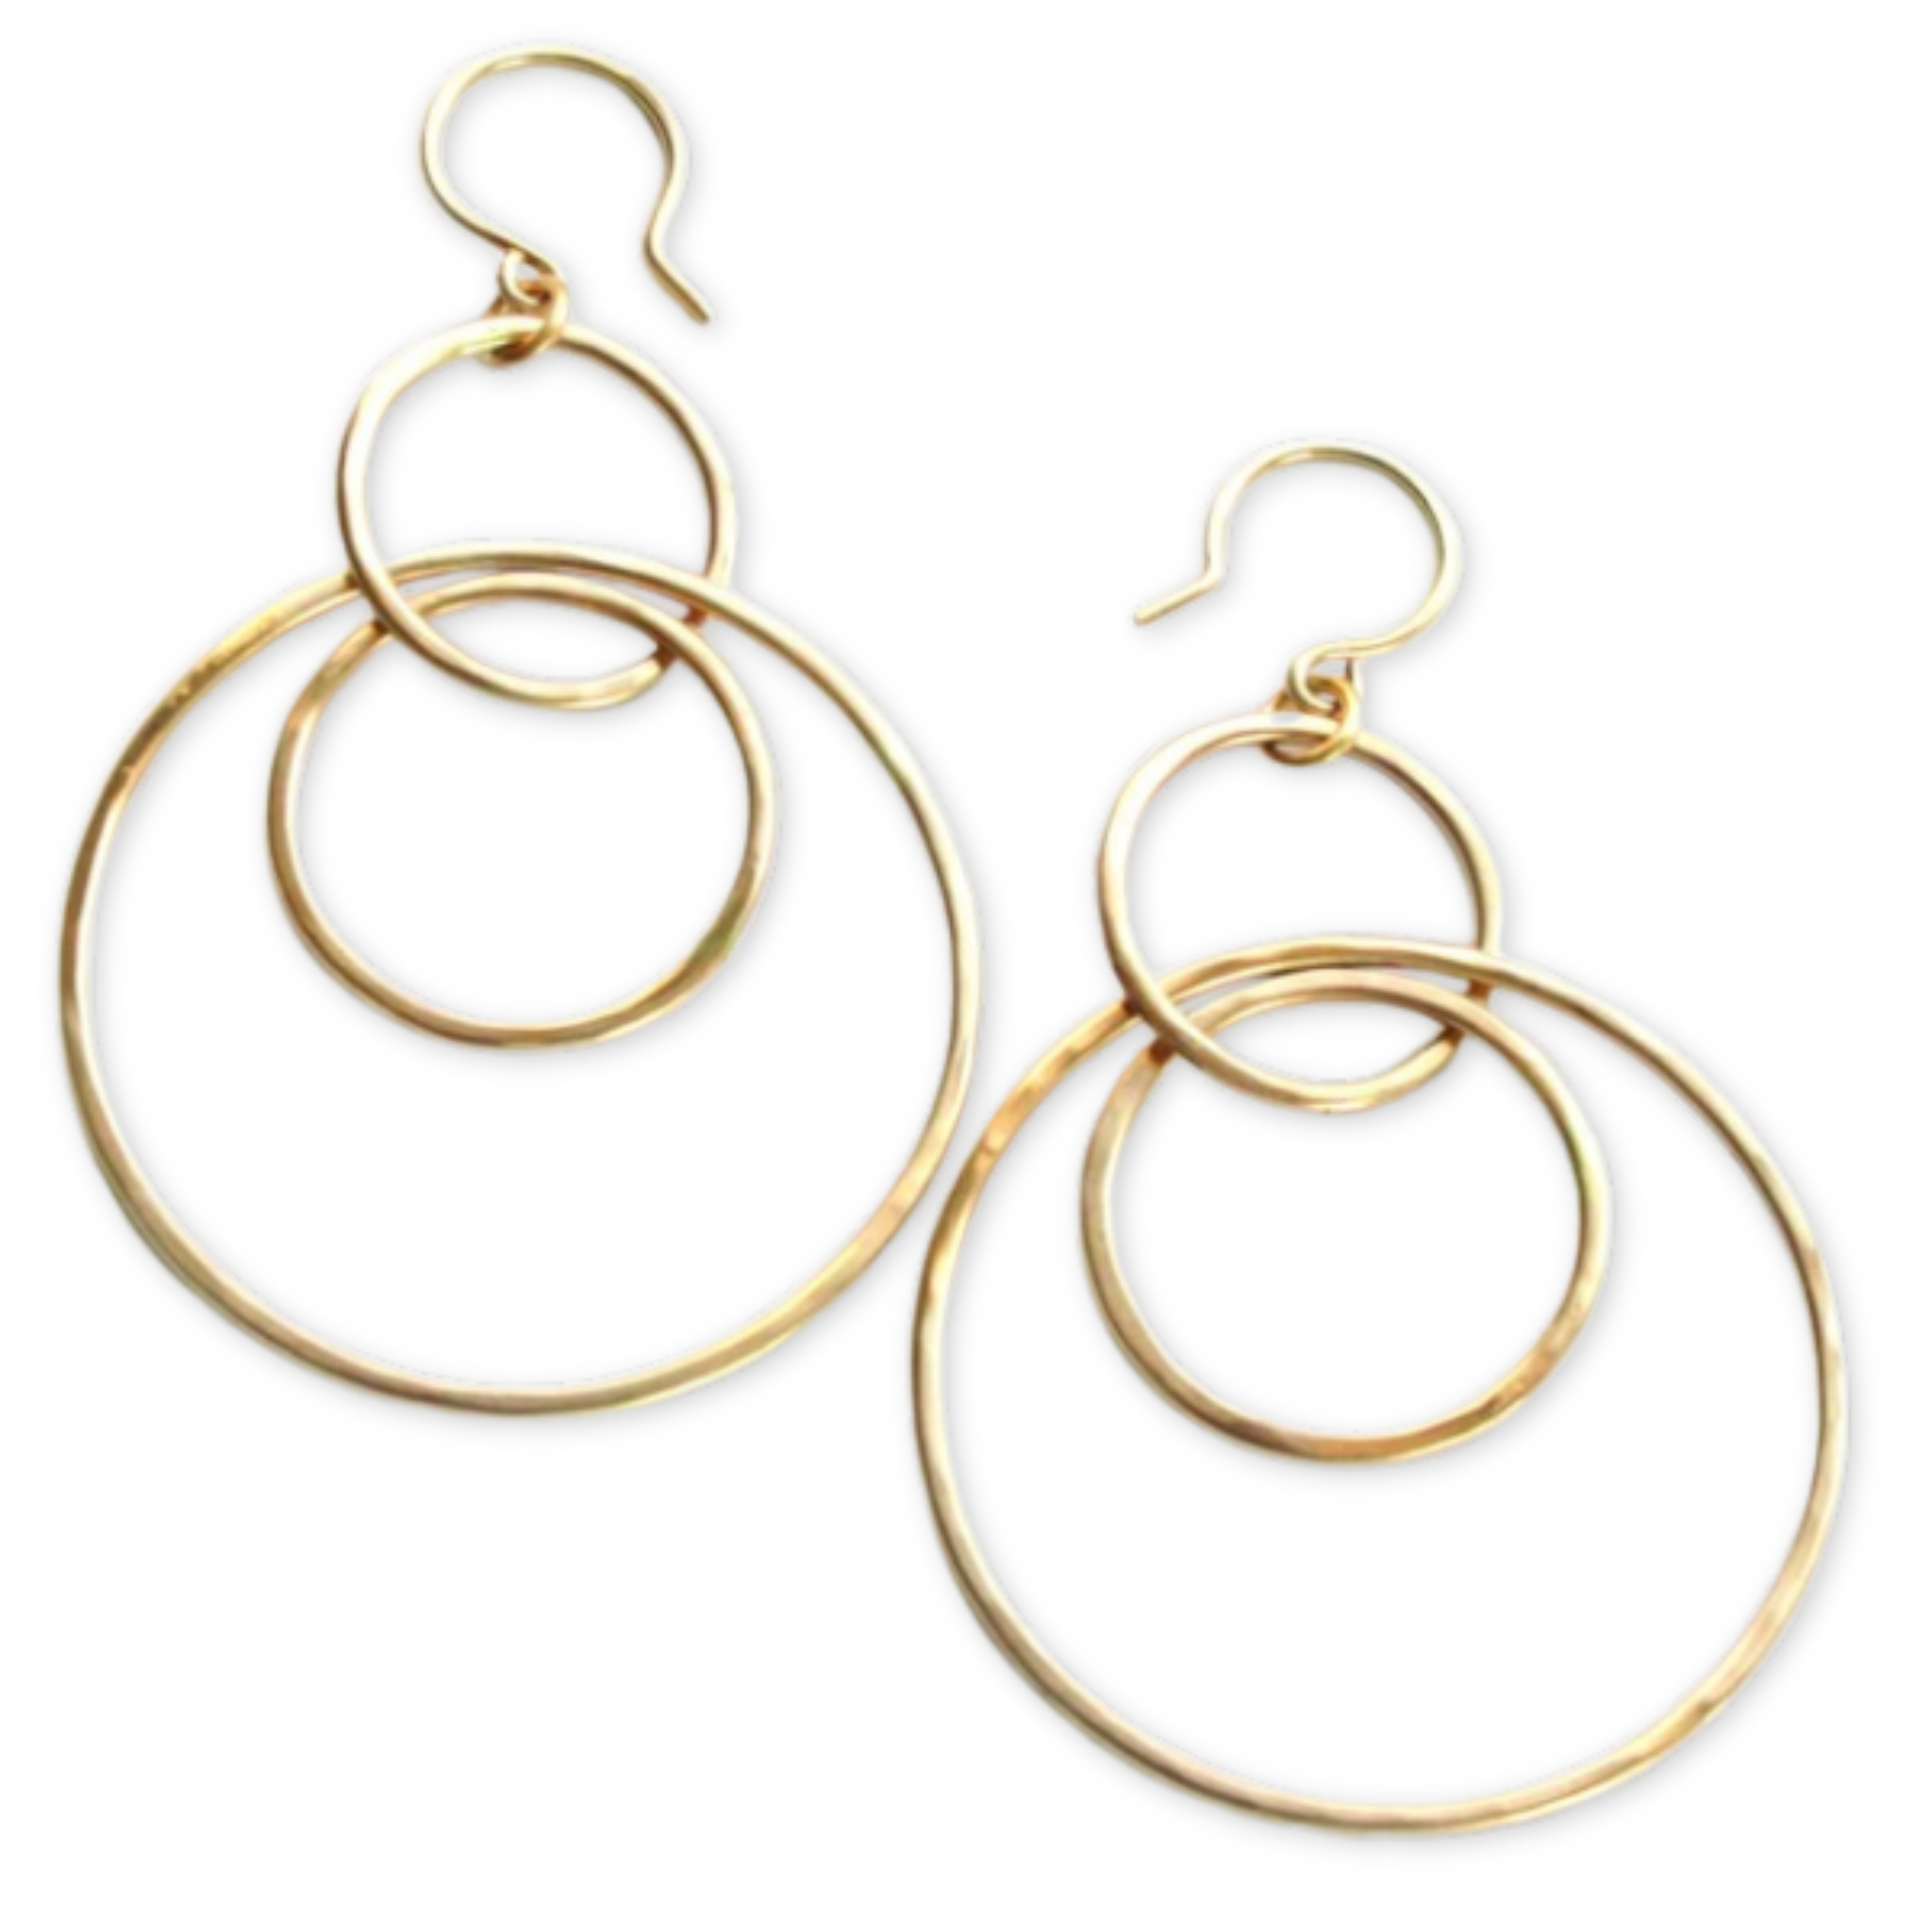 pair of earrings with 3 interlocked circles